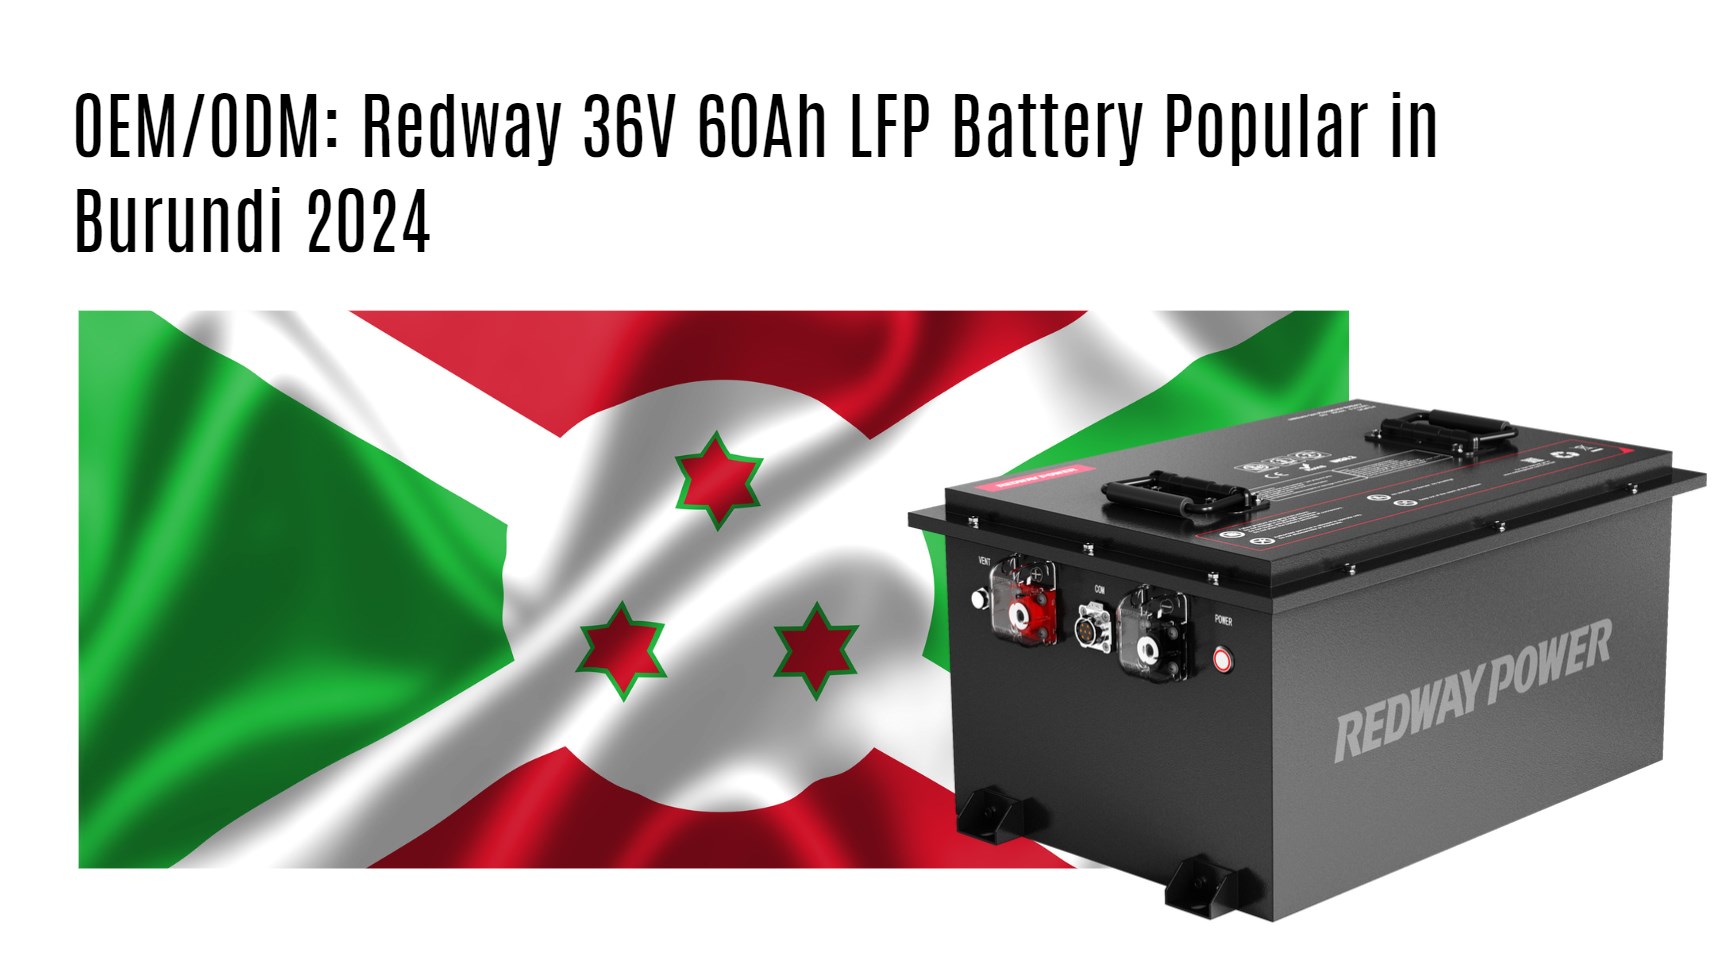 OEM/ODM: Redway 36V 60Ah LFP Battery Popular in Burundi 2024